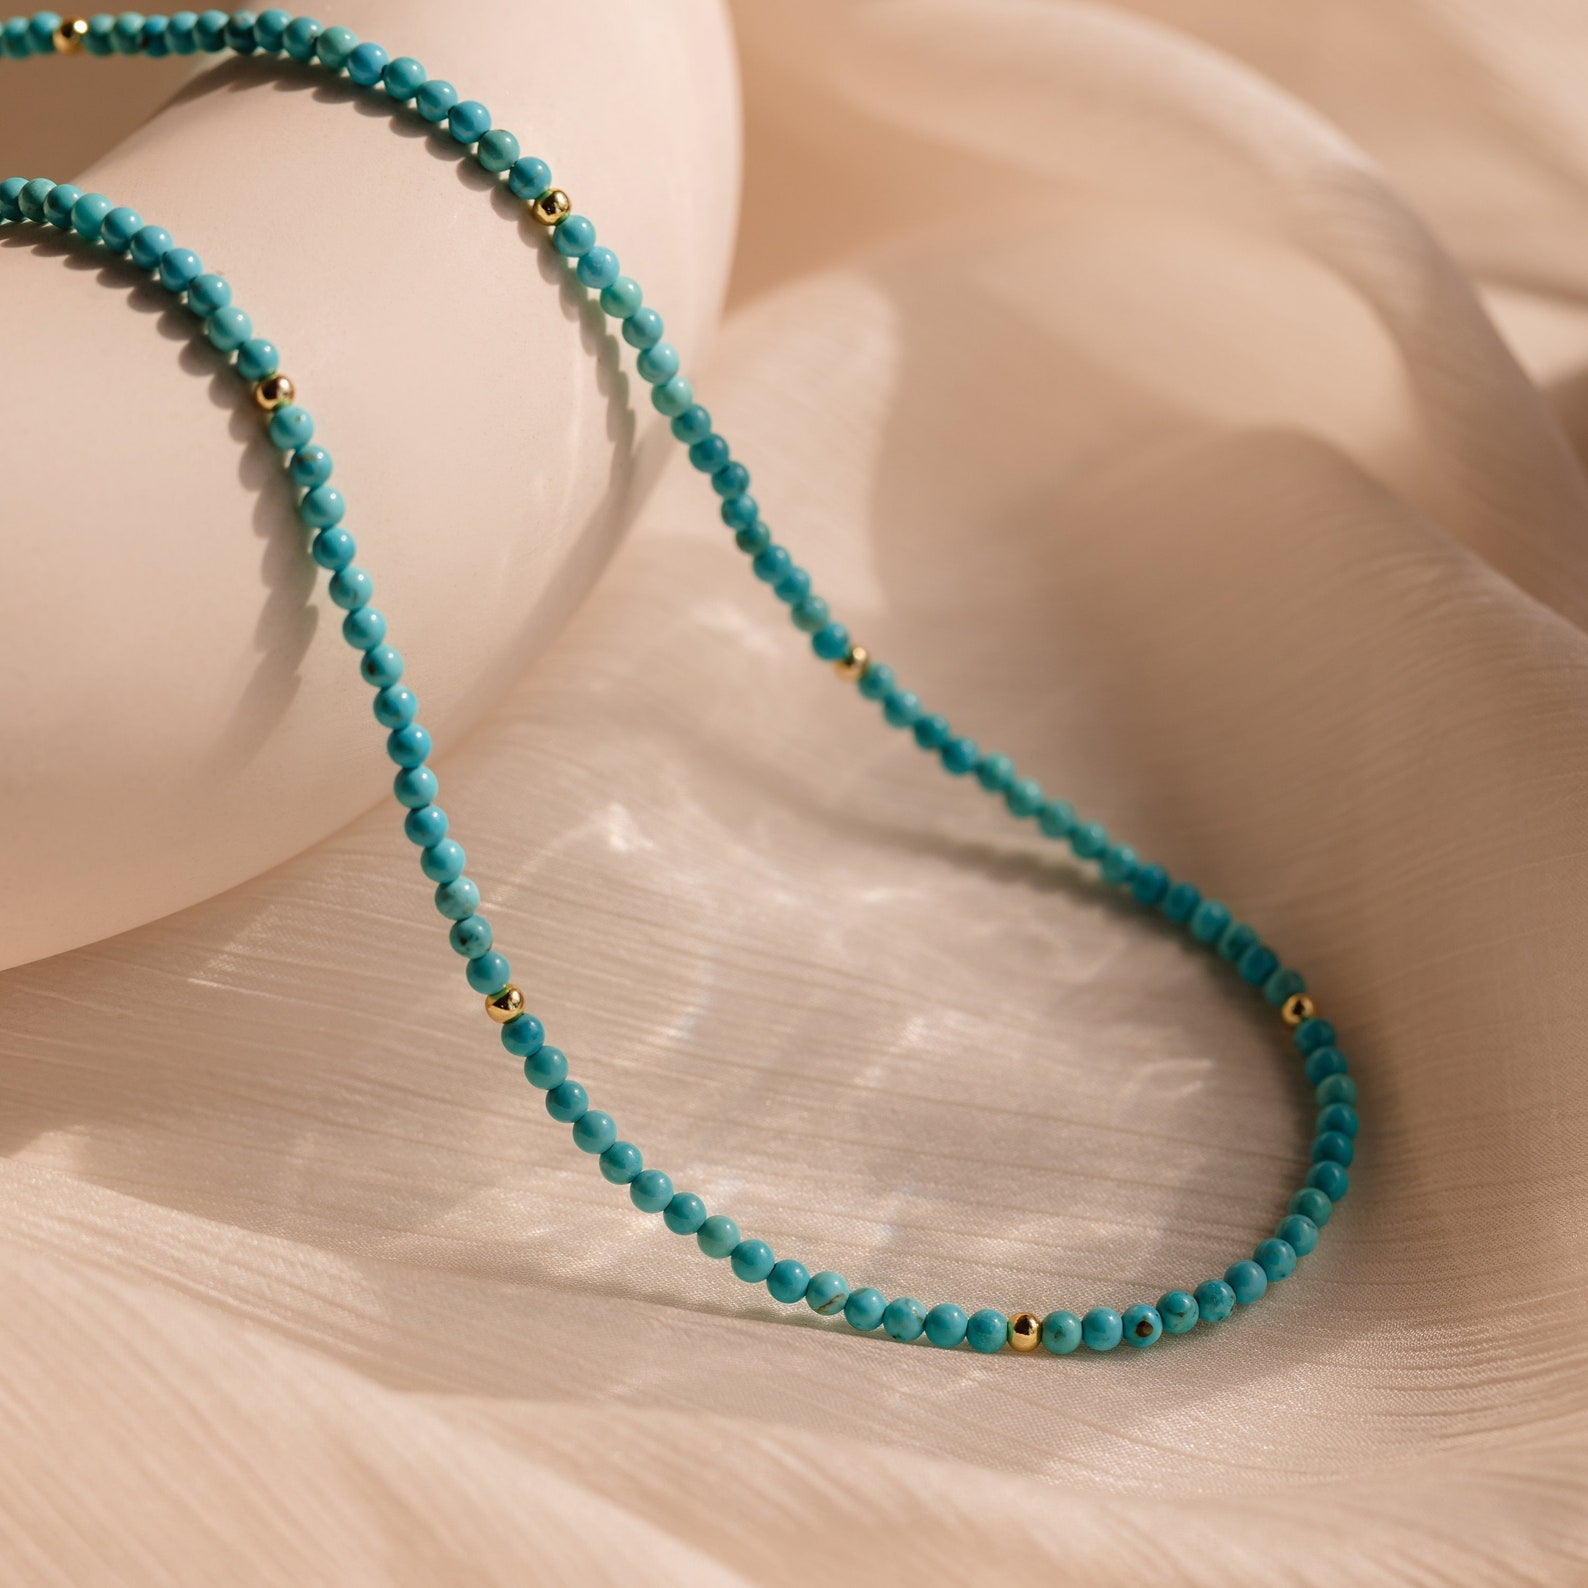 Waist Beads handmade belly chain weight control body jewelry – Tribalgh